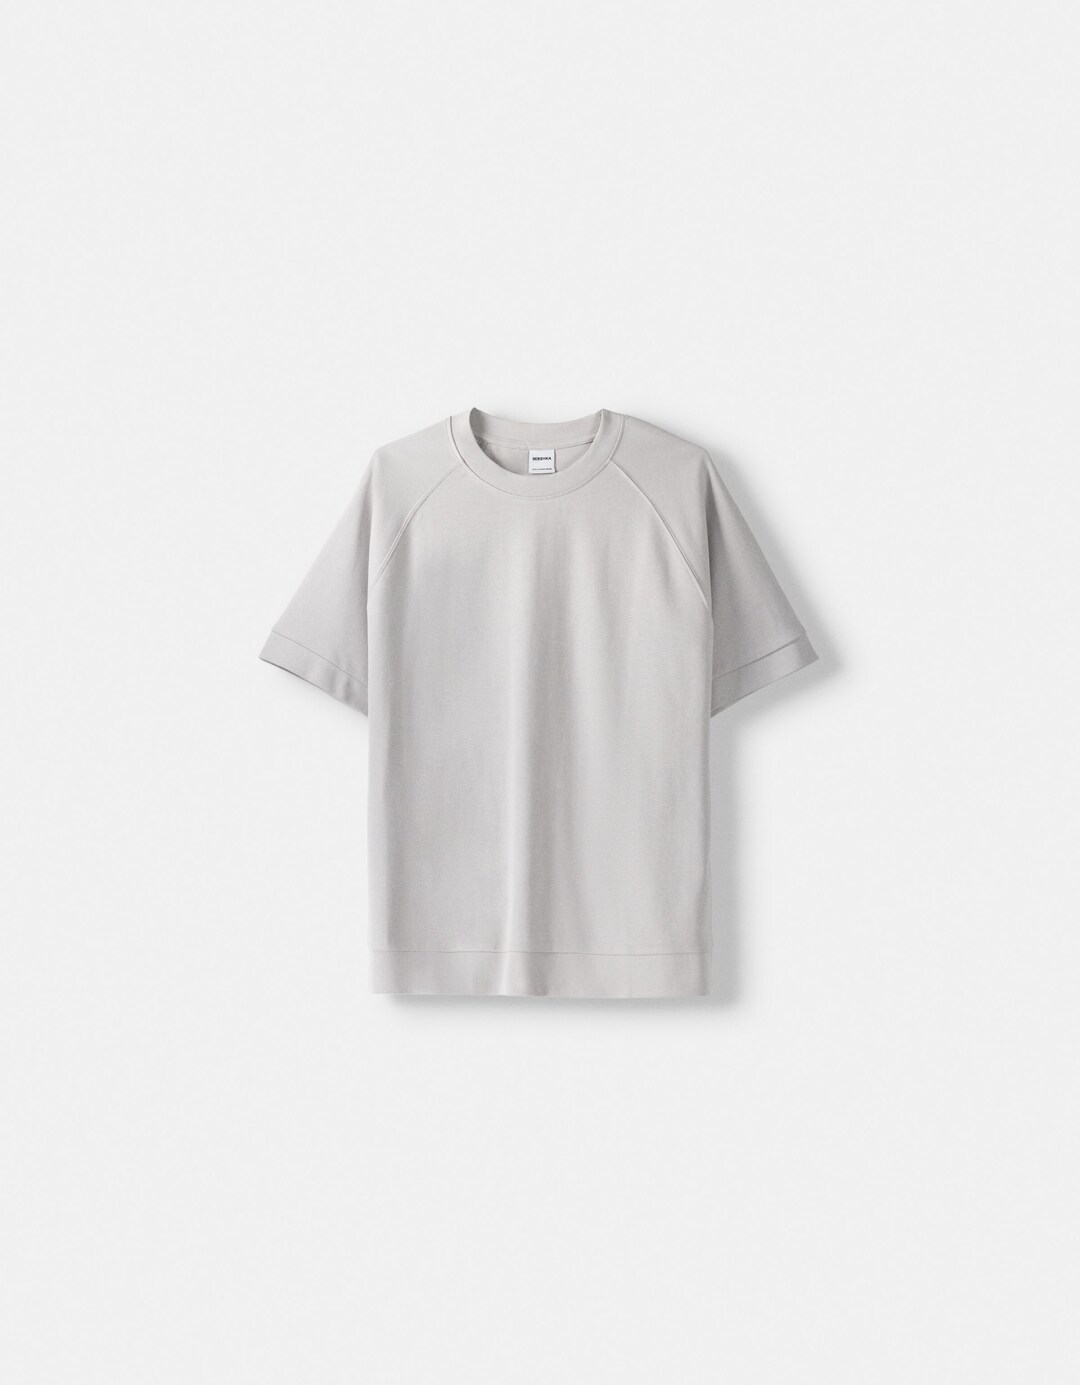 Interlock boxy fit short sleeve T-shirt